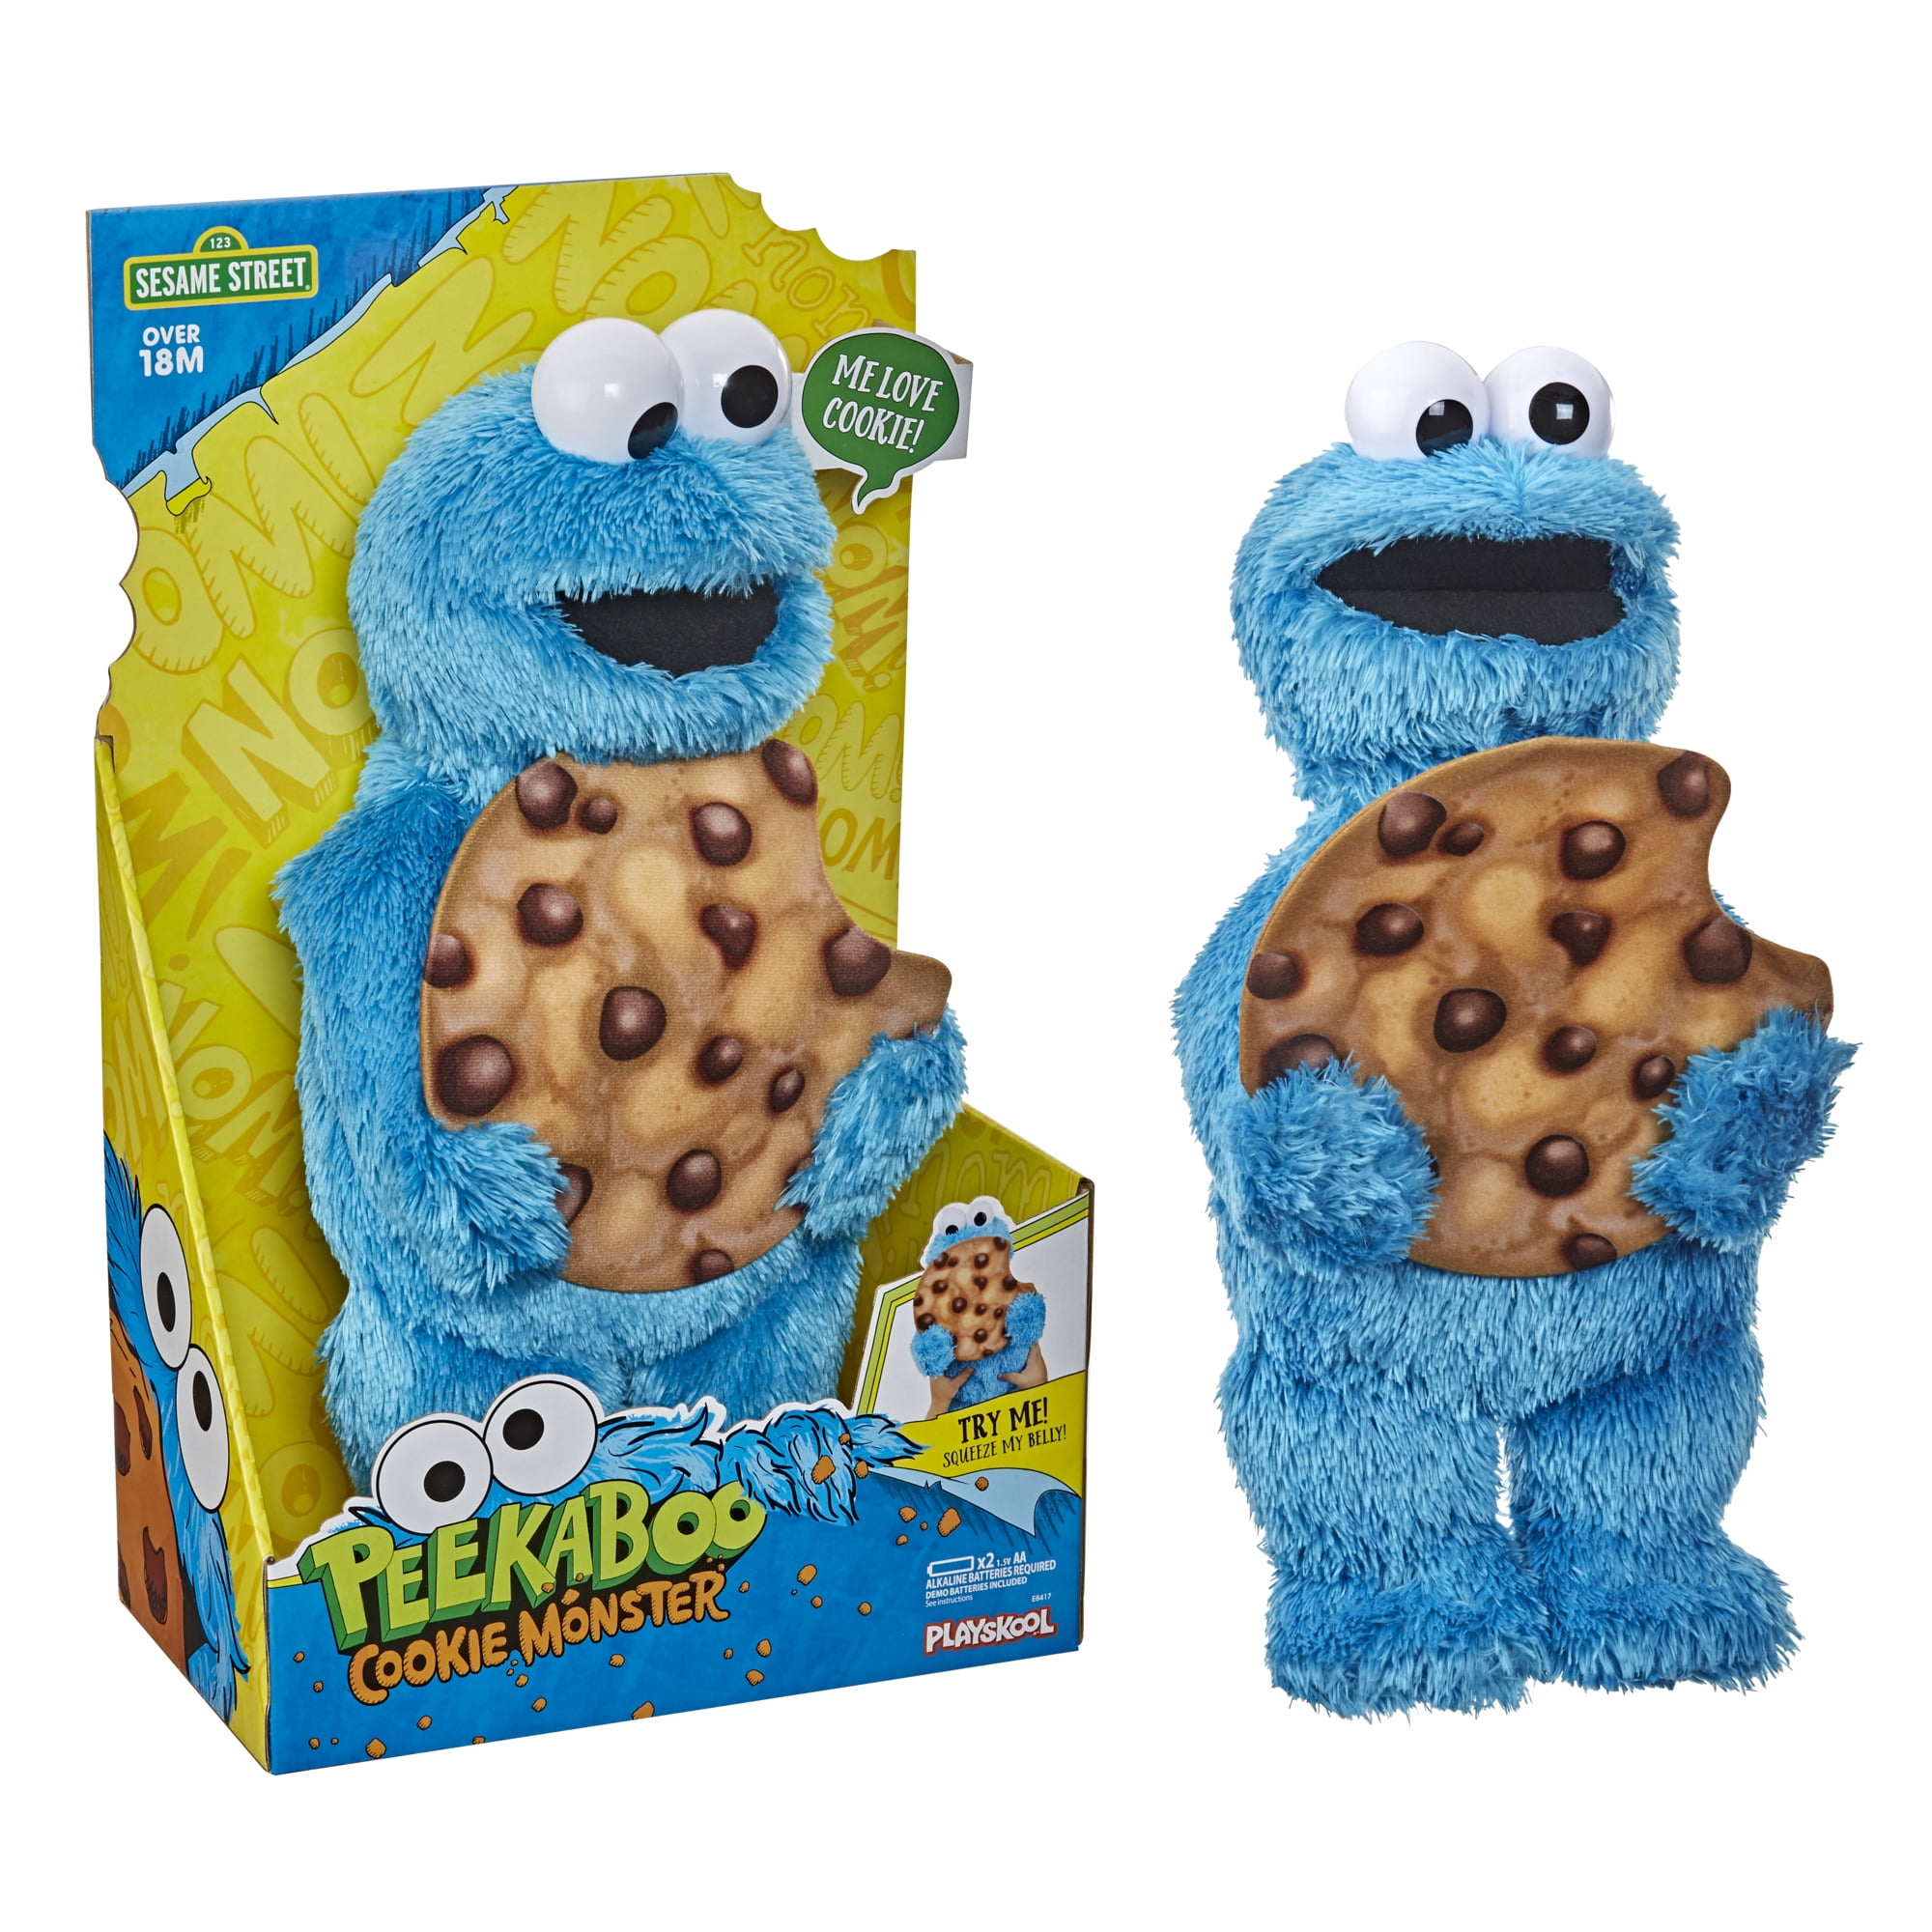 Sesame Street Peekaboo Cookie Monster 13 Inch Plush Toy For 18 Months And Up Walmart Com Walmart Com